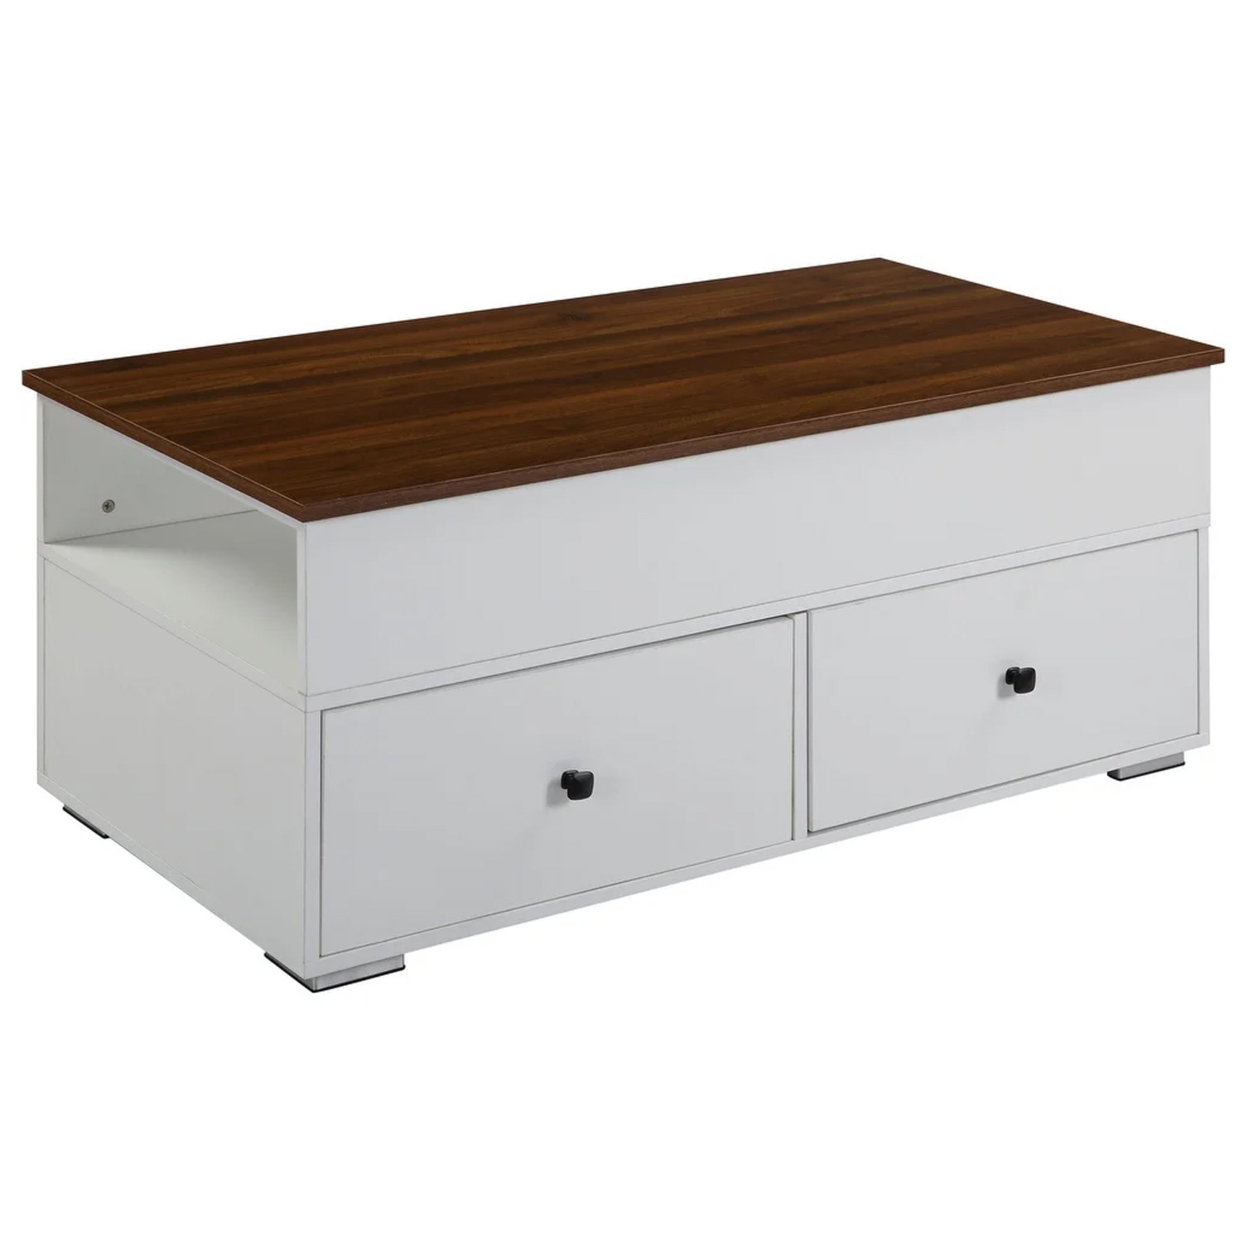 46 Inch Wood Coffee Table, Lift Top, 2 Drawers, Storage, Walnut, White- Saltoro Sherpi